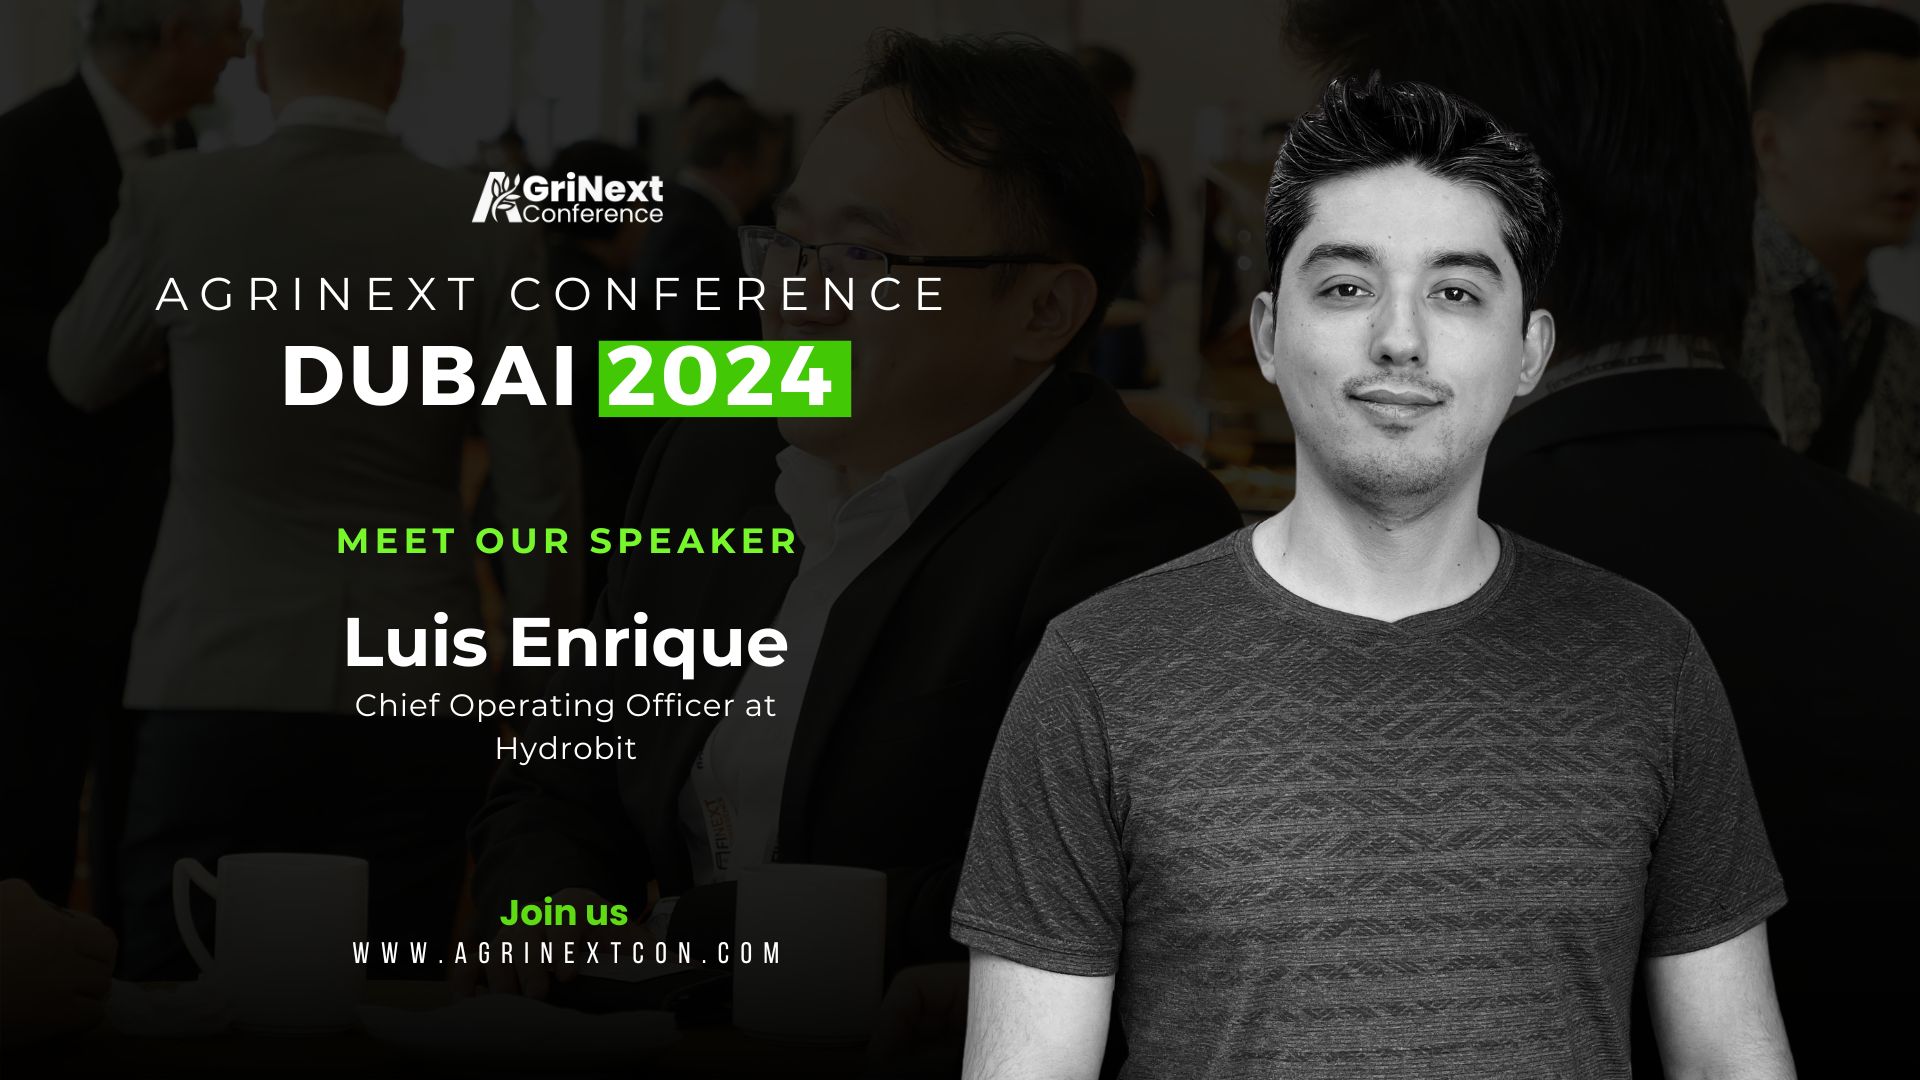 Luis Enrique to Speak at AgriNext Conference in Dubai